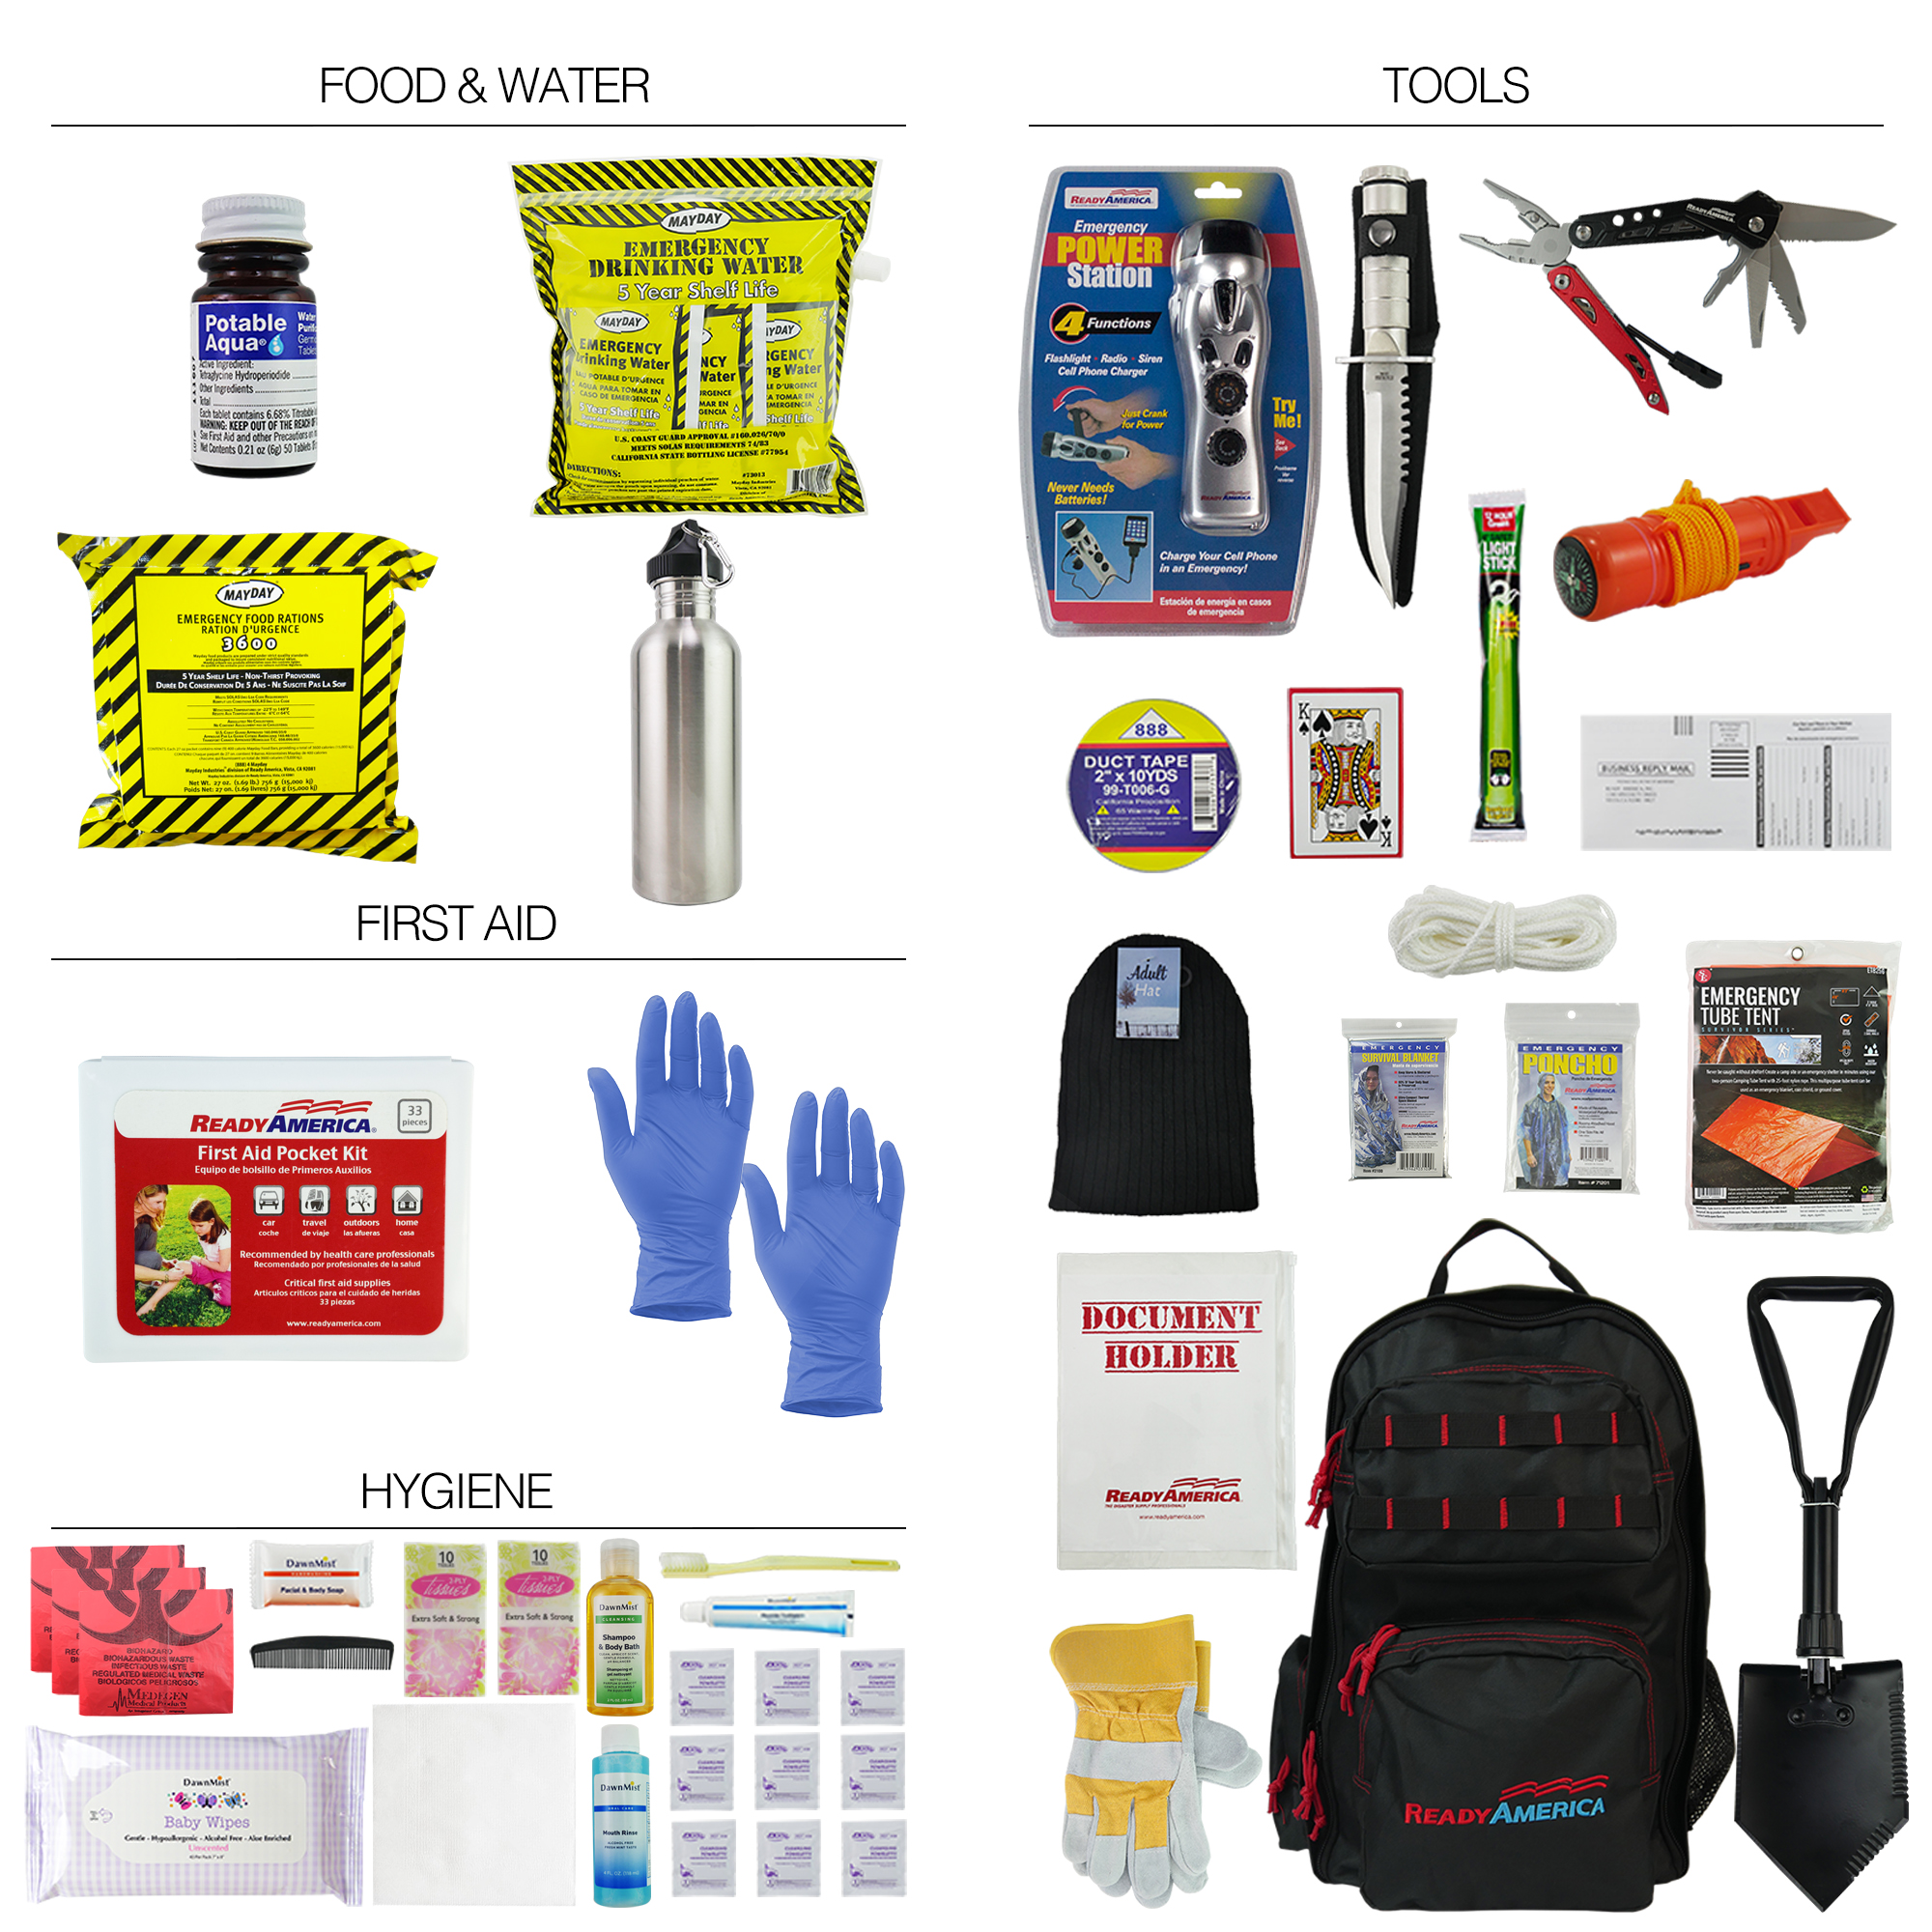 10-Piece Emergency Survival Kit